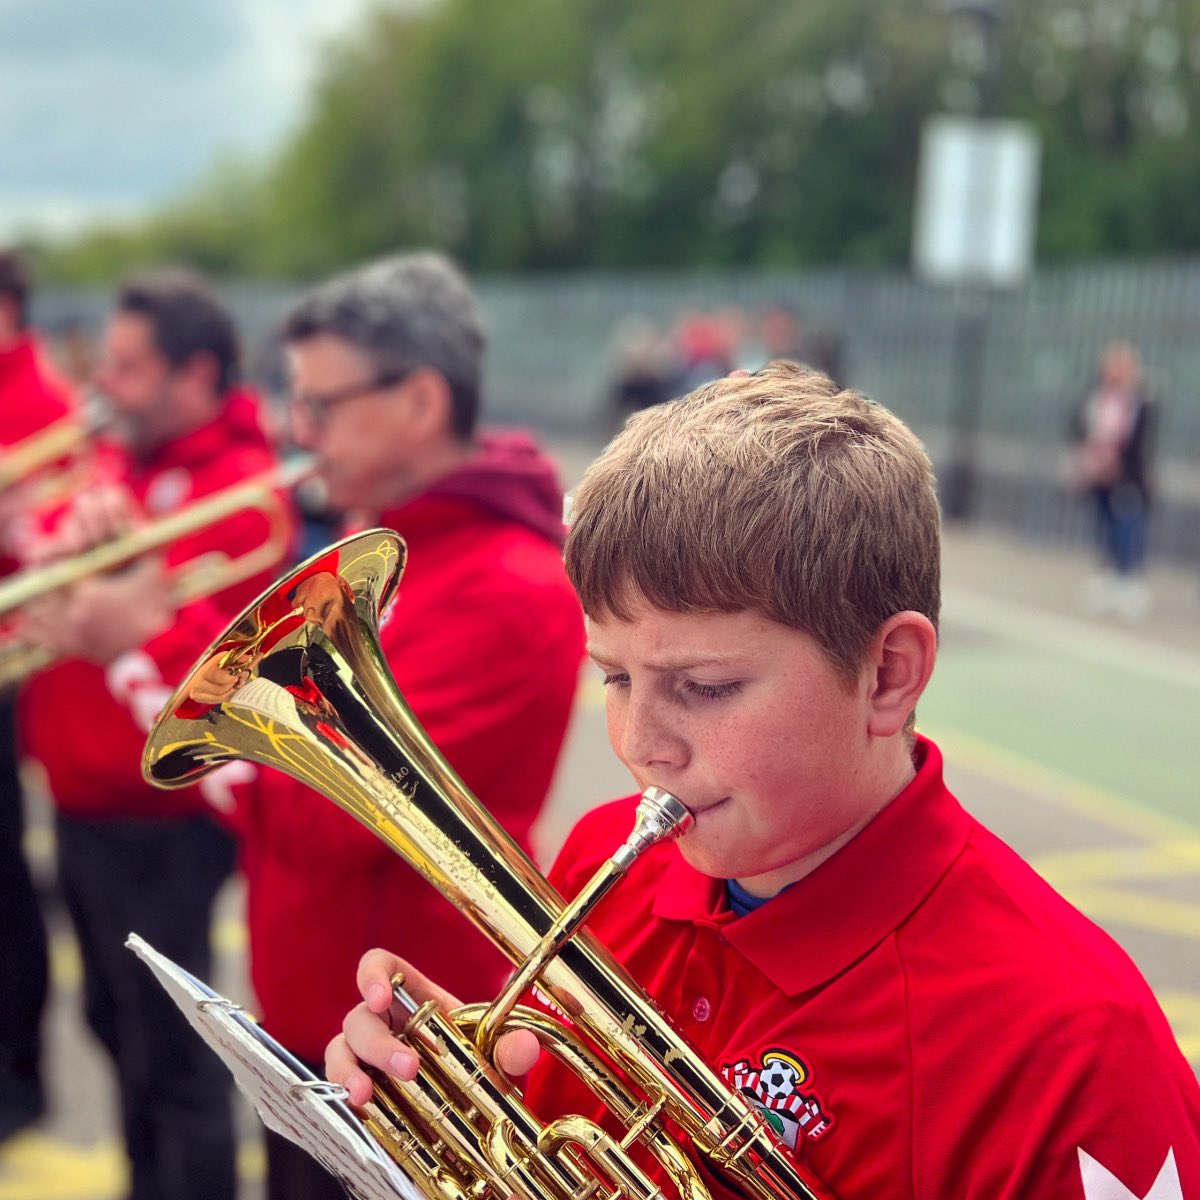 Got the nippers leading the band today! Saint Brass academy. 👌 #saintsfc #southampton #efl #music #soton #drums #brass #band #saxophone #trombone #trumpet